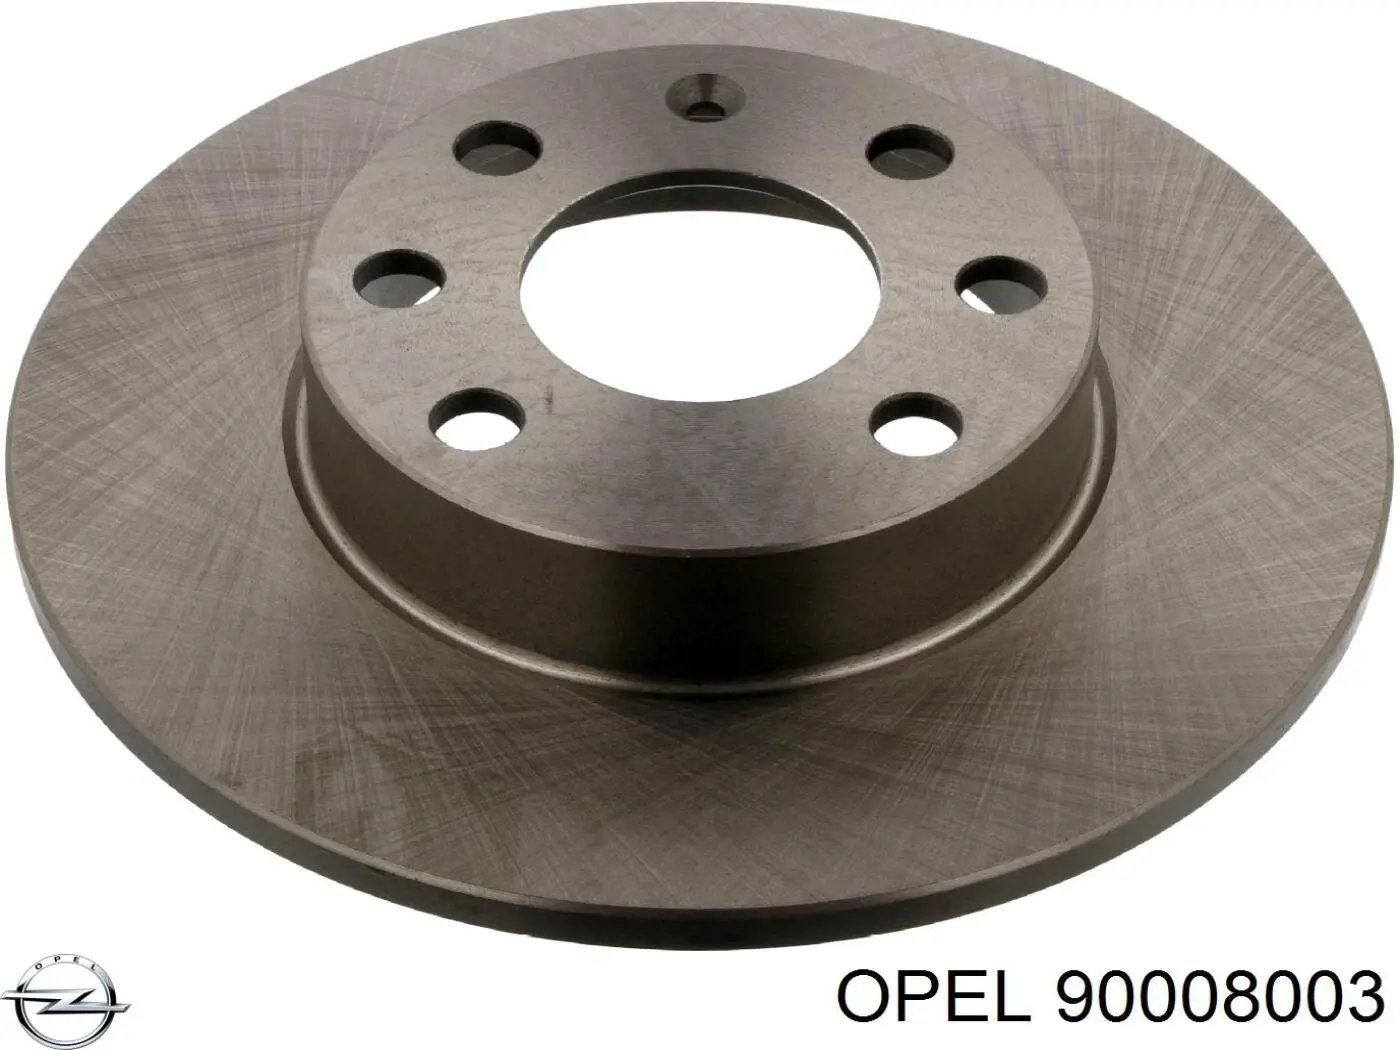 90008003 Opel disco de freno delantero